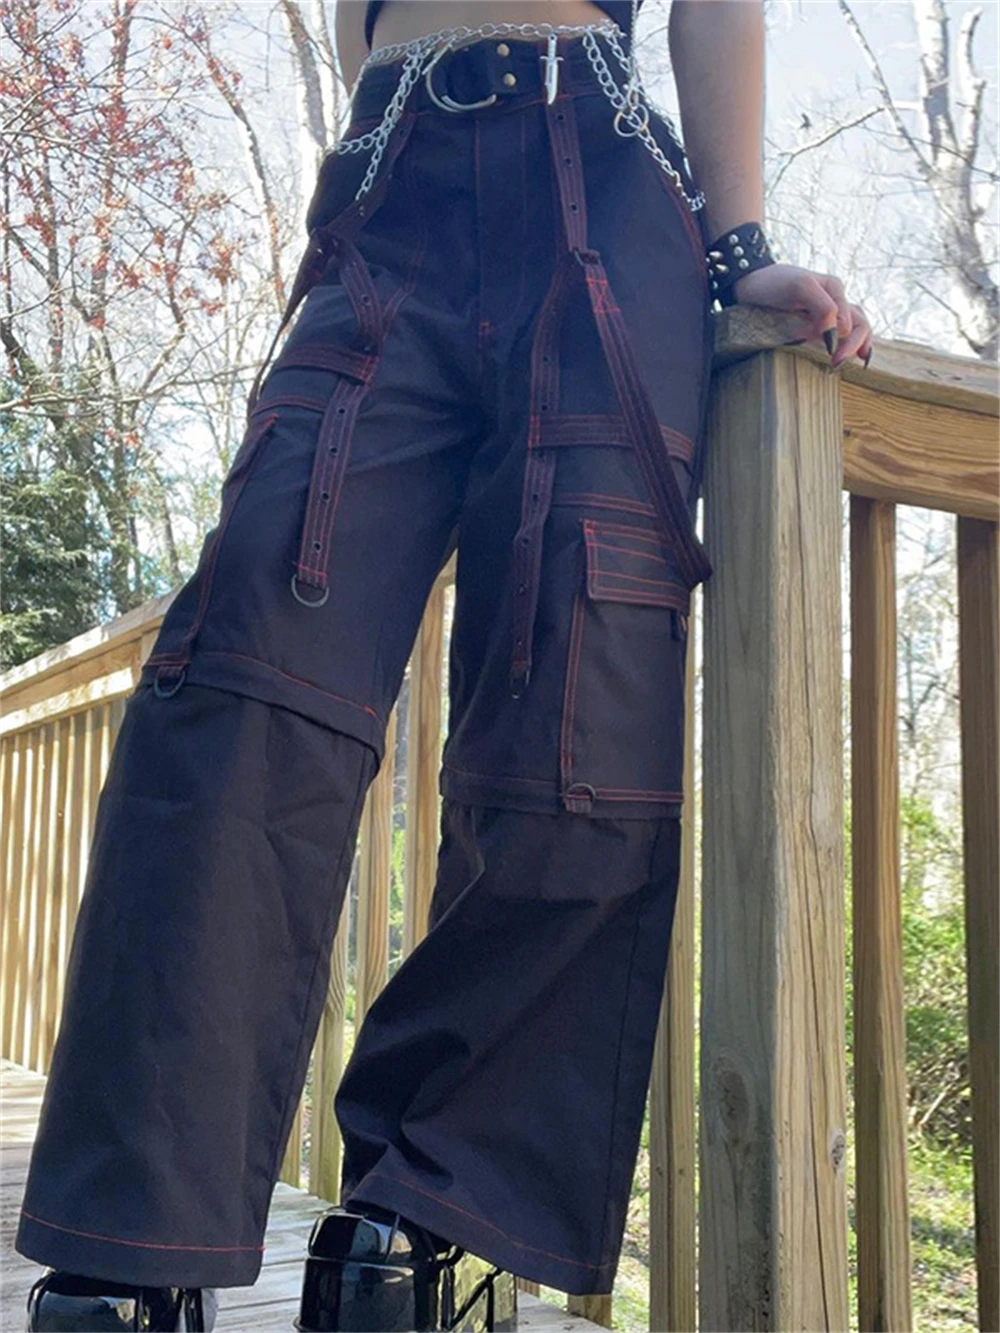 Emo Dark Cyber Y2k Pants Hippie Cargo Bodycon Gothic Punk Alt Baggy Jeans  Rivets Black Women Goth Hip Hop Kpop Academia Pants